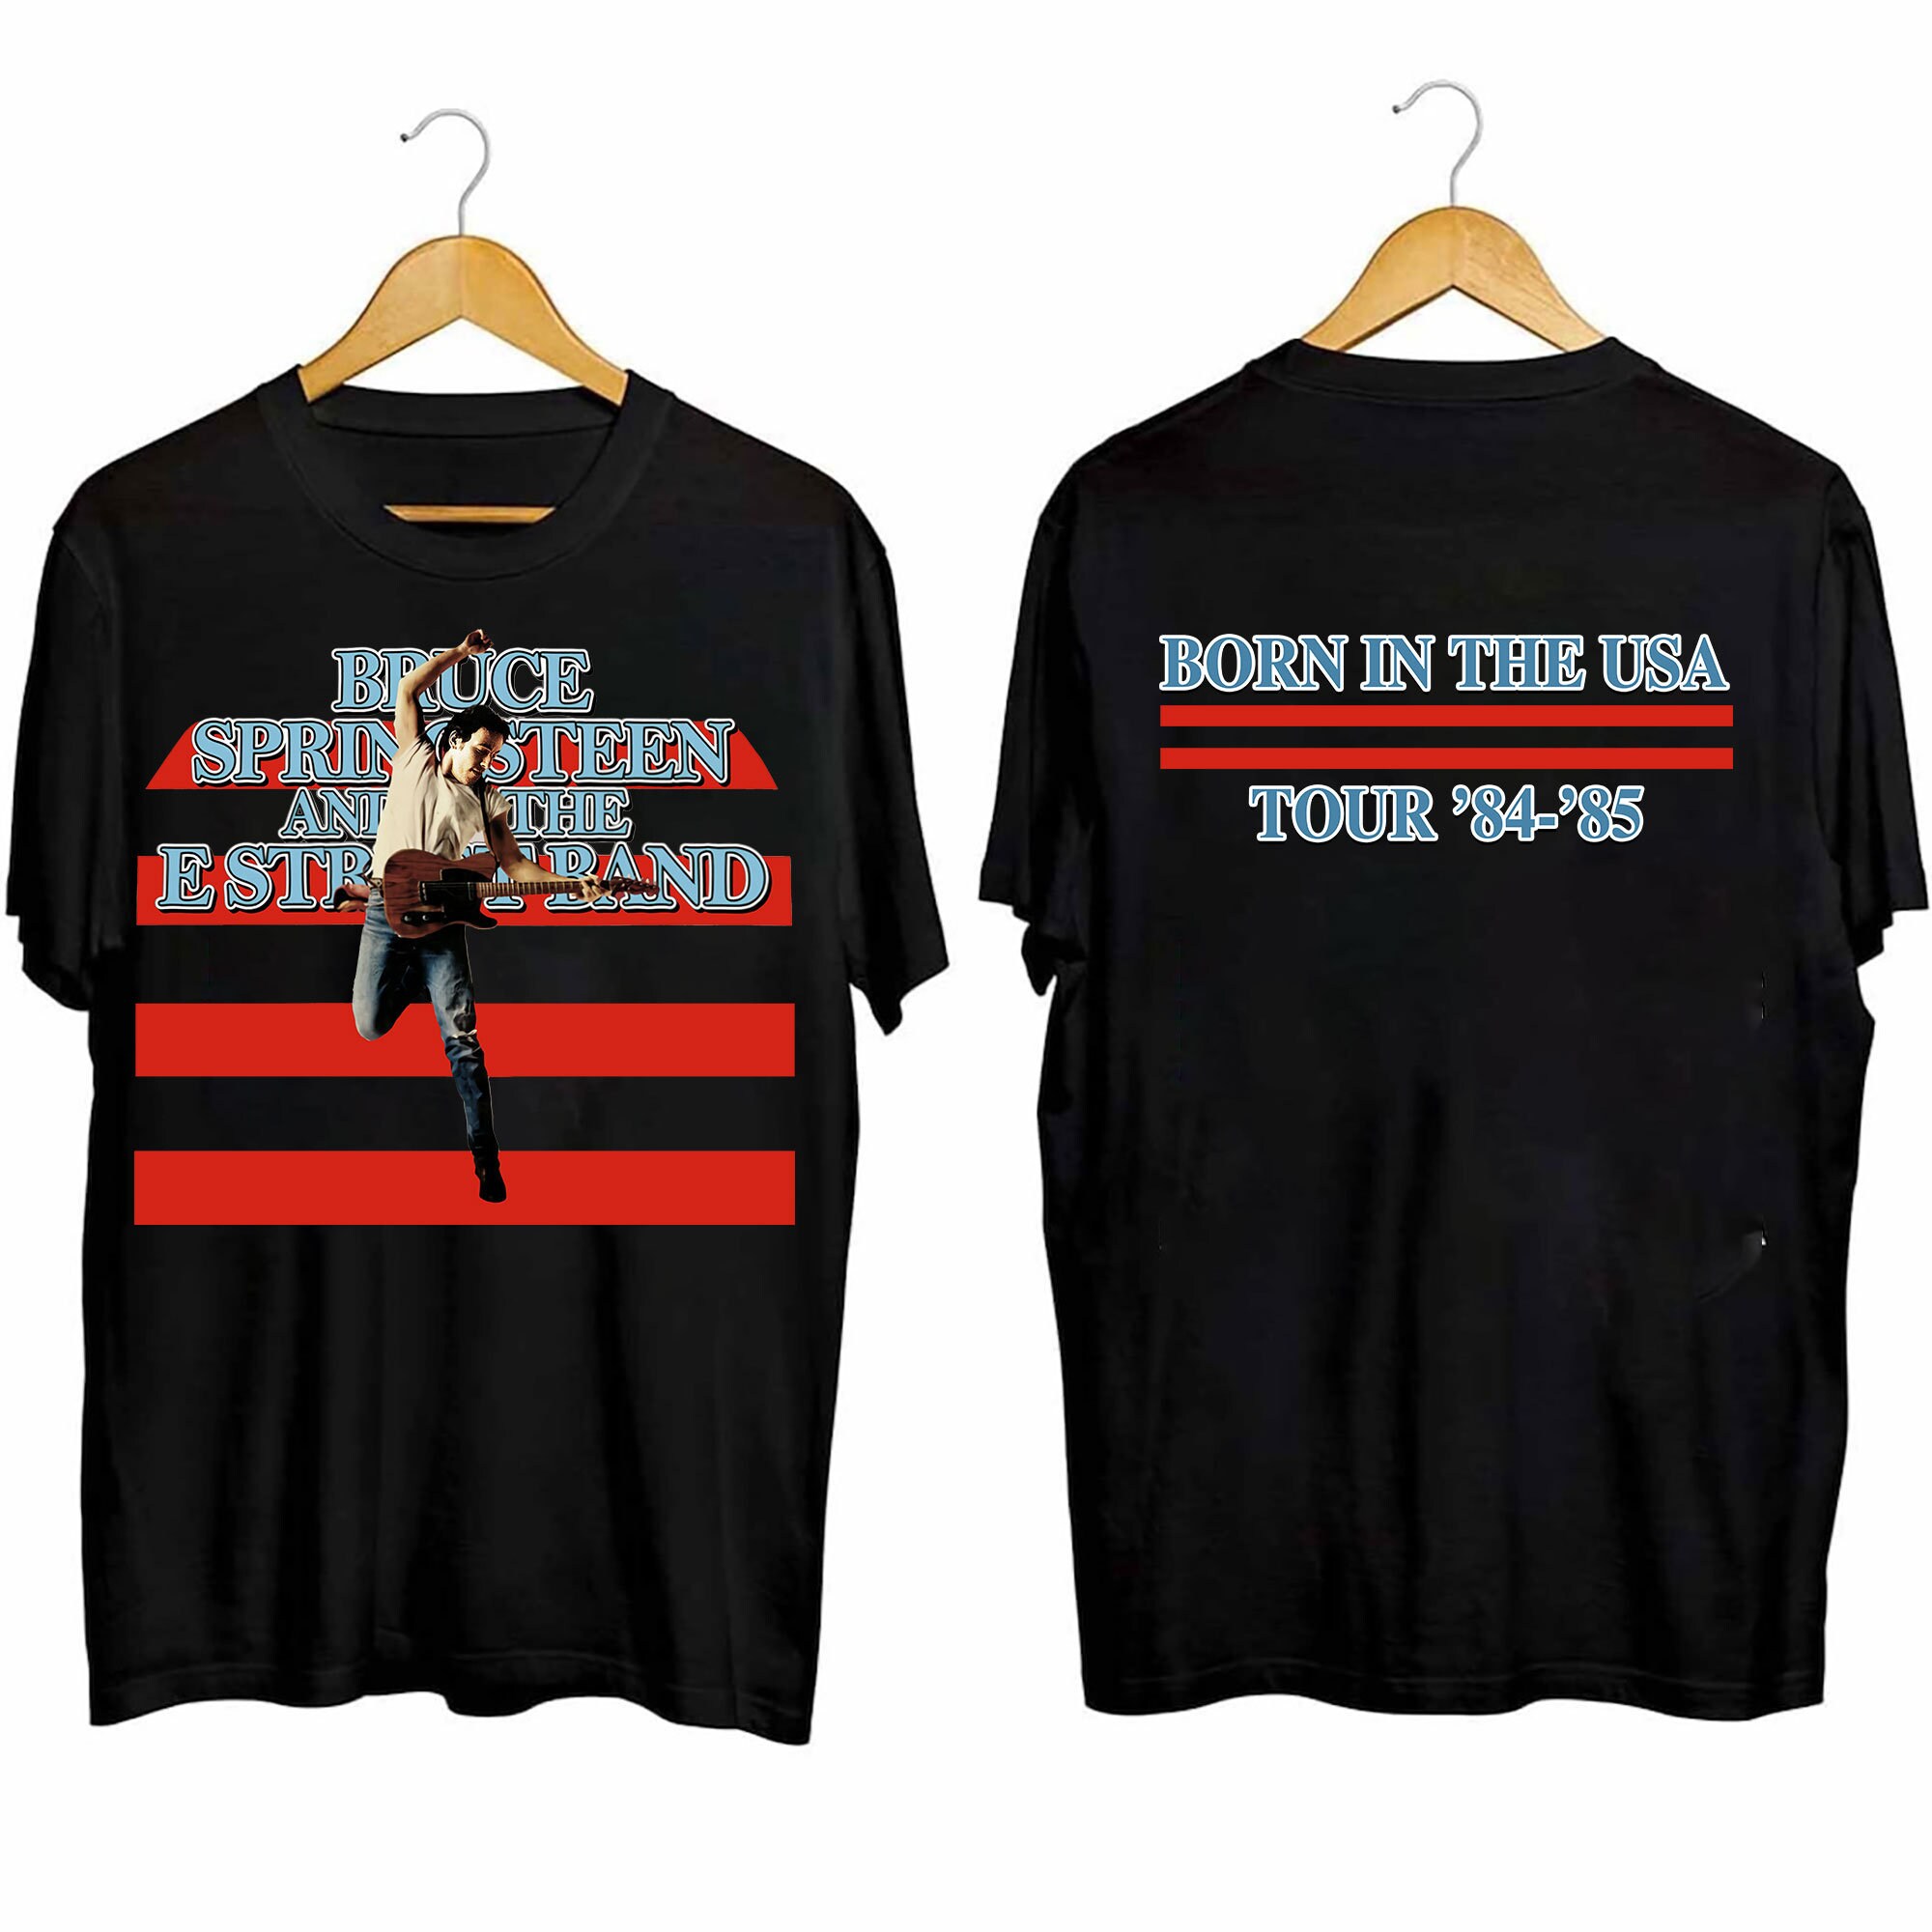 Bruce Springsteen And E Street Band World Tour '84-'85 shirt